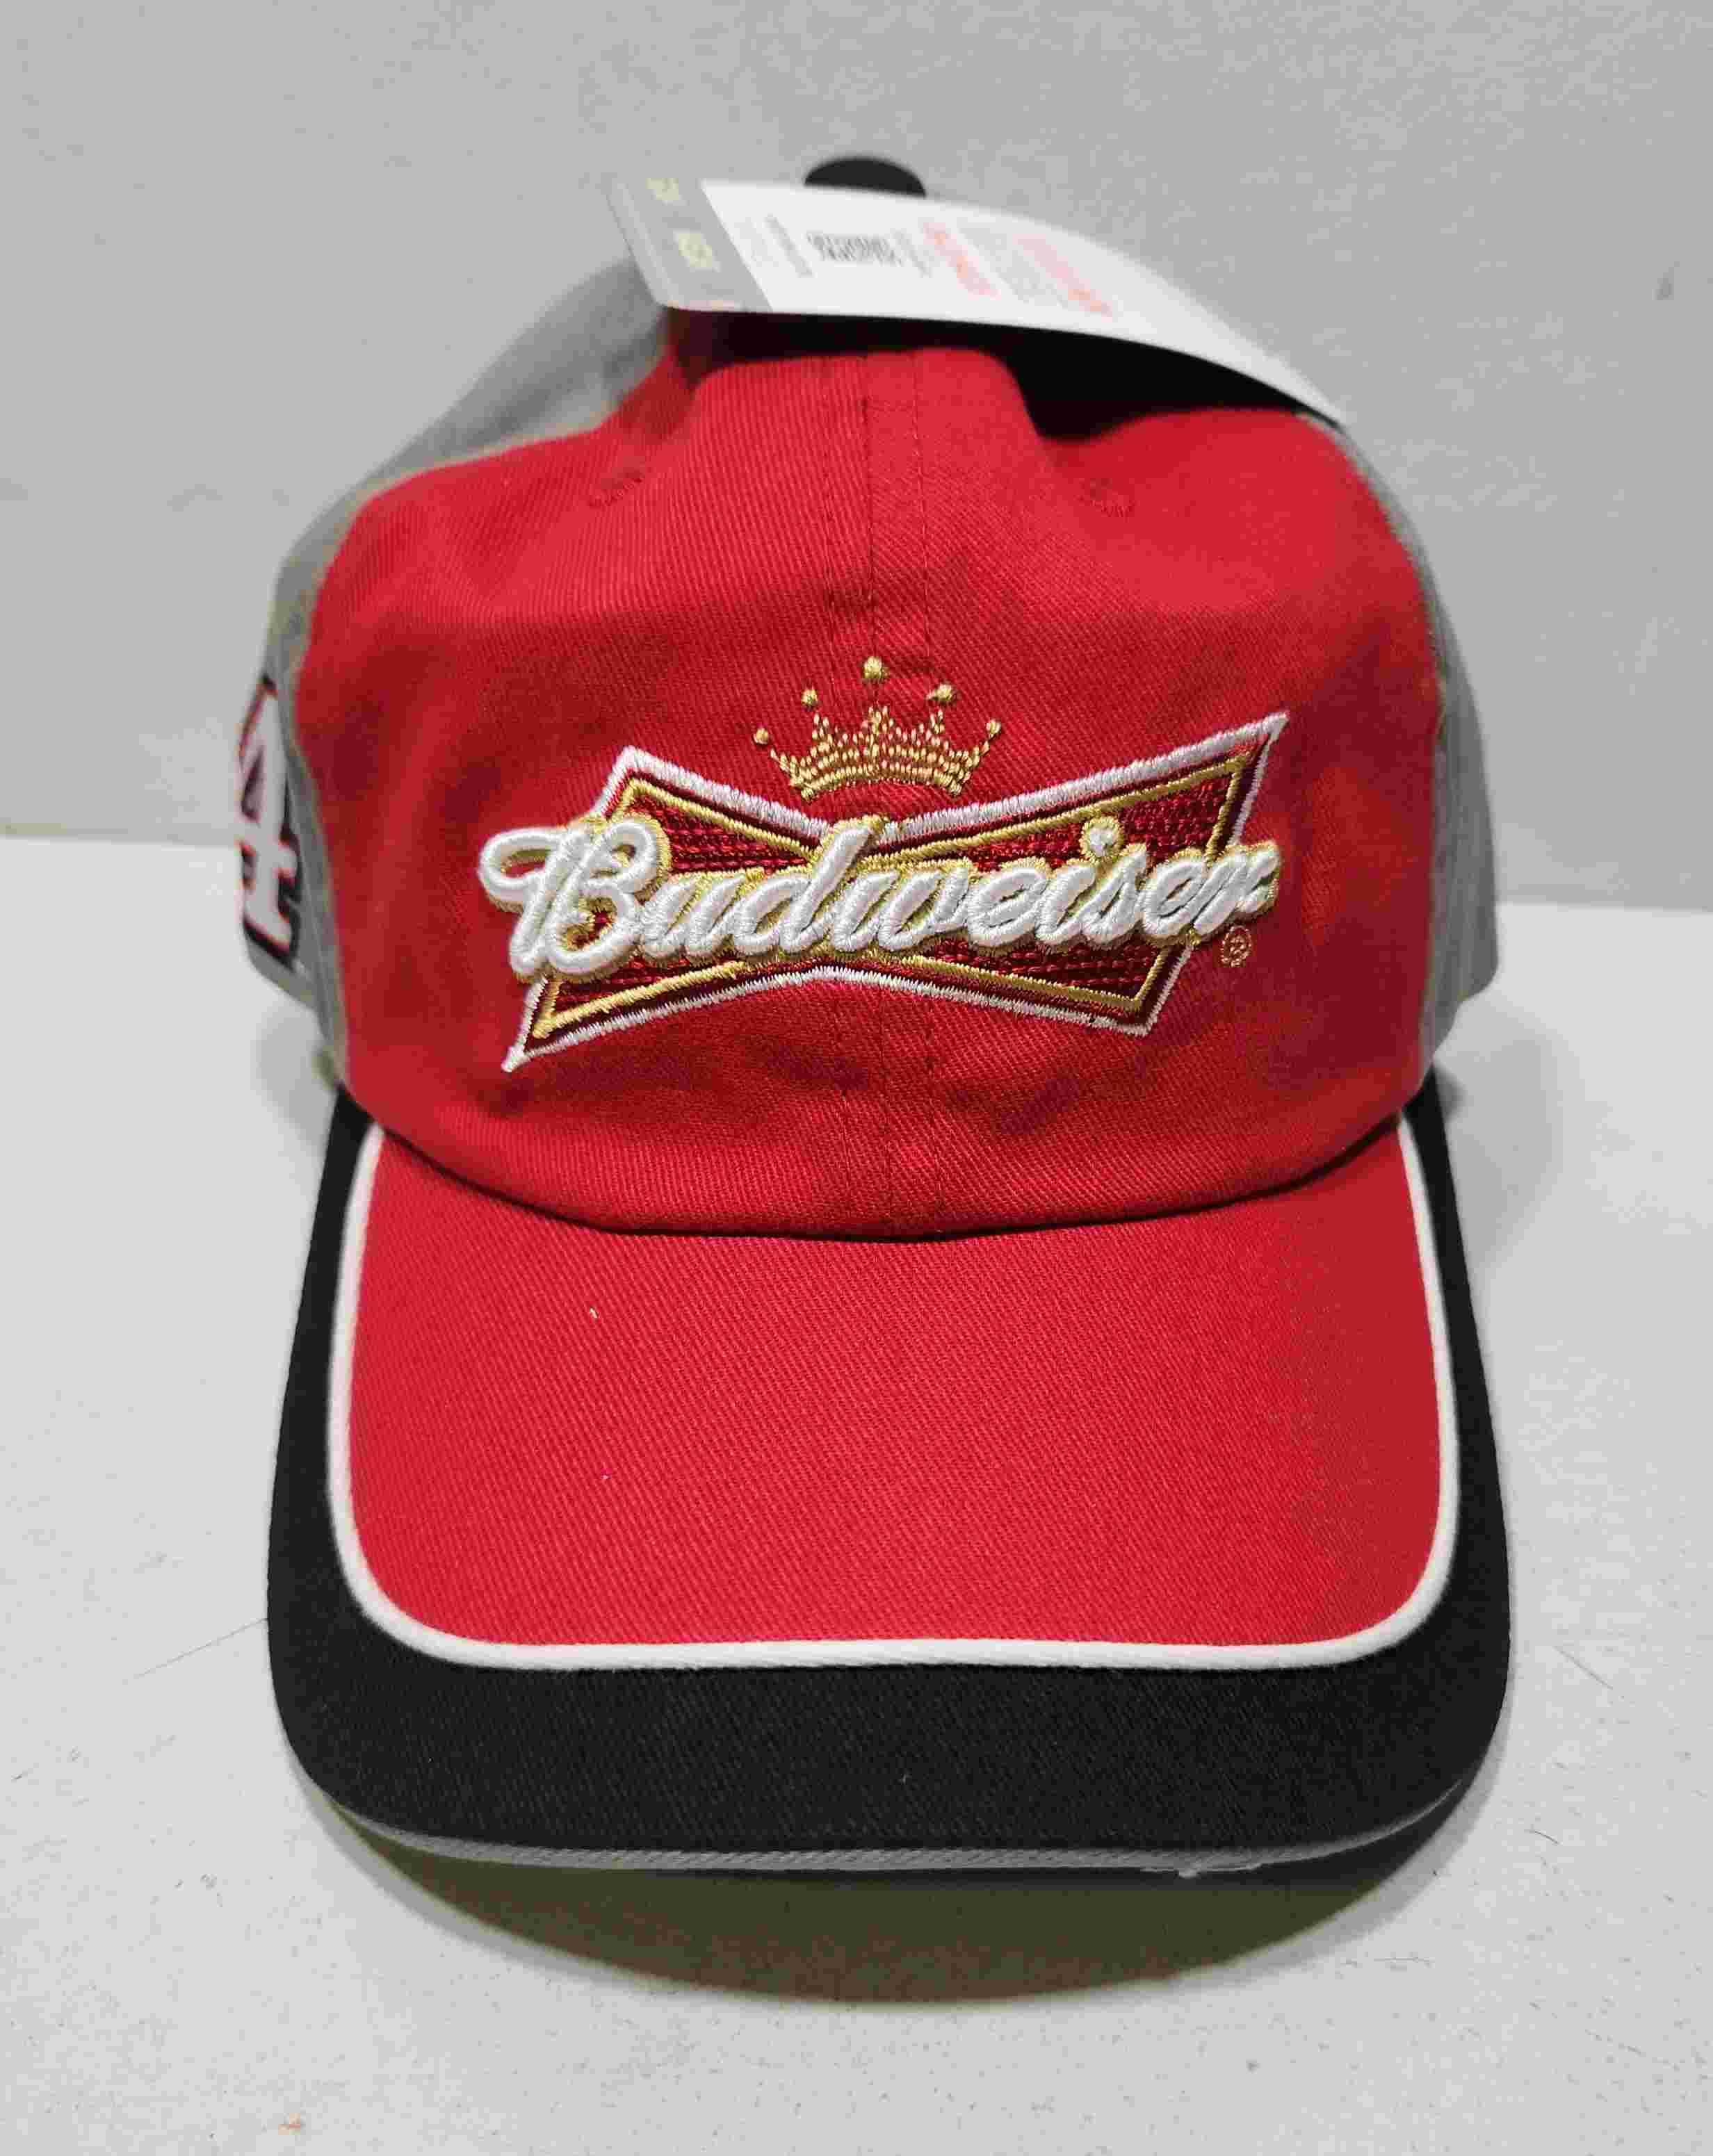 2015 Kevin Harvick Budweiser "Fan Up" cap